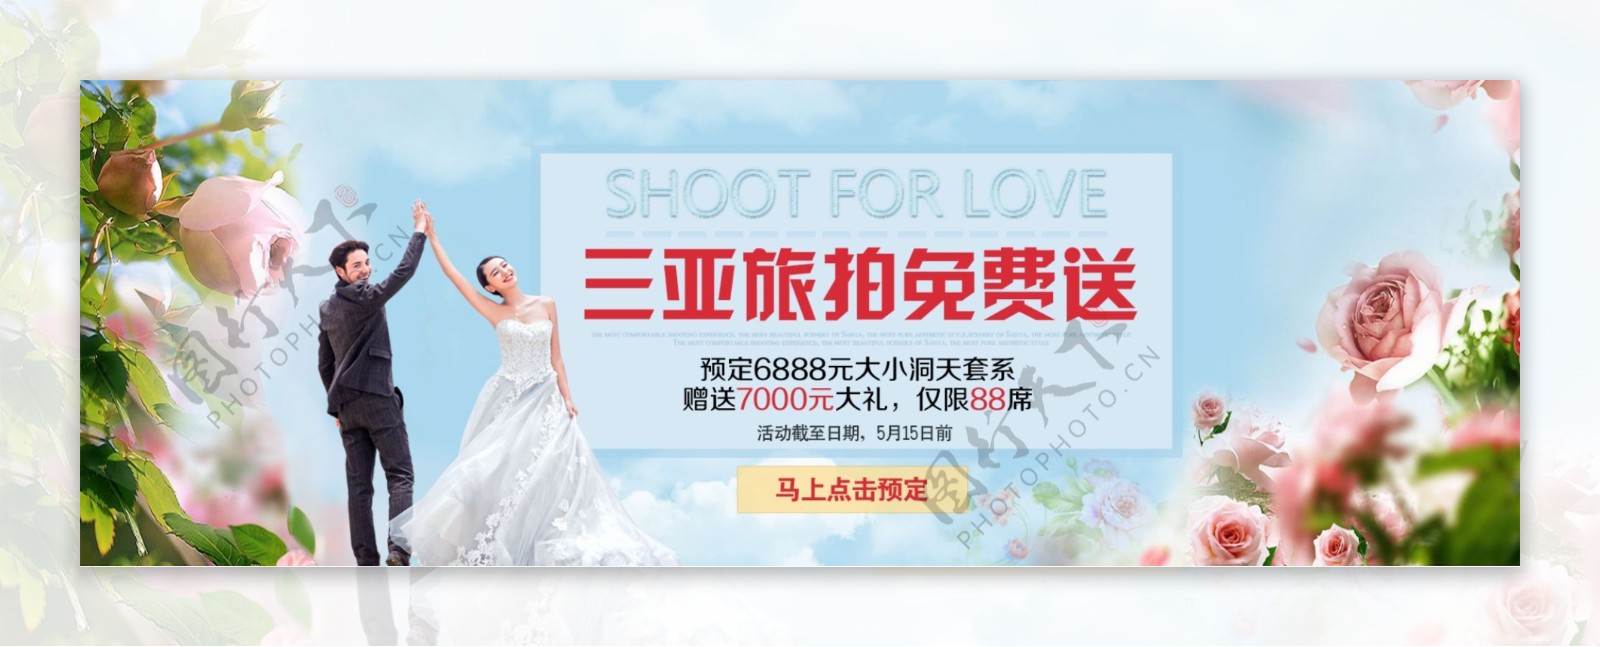 婚纱海报广告banner